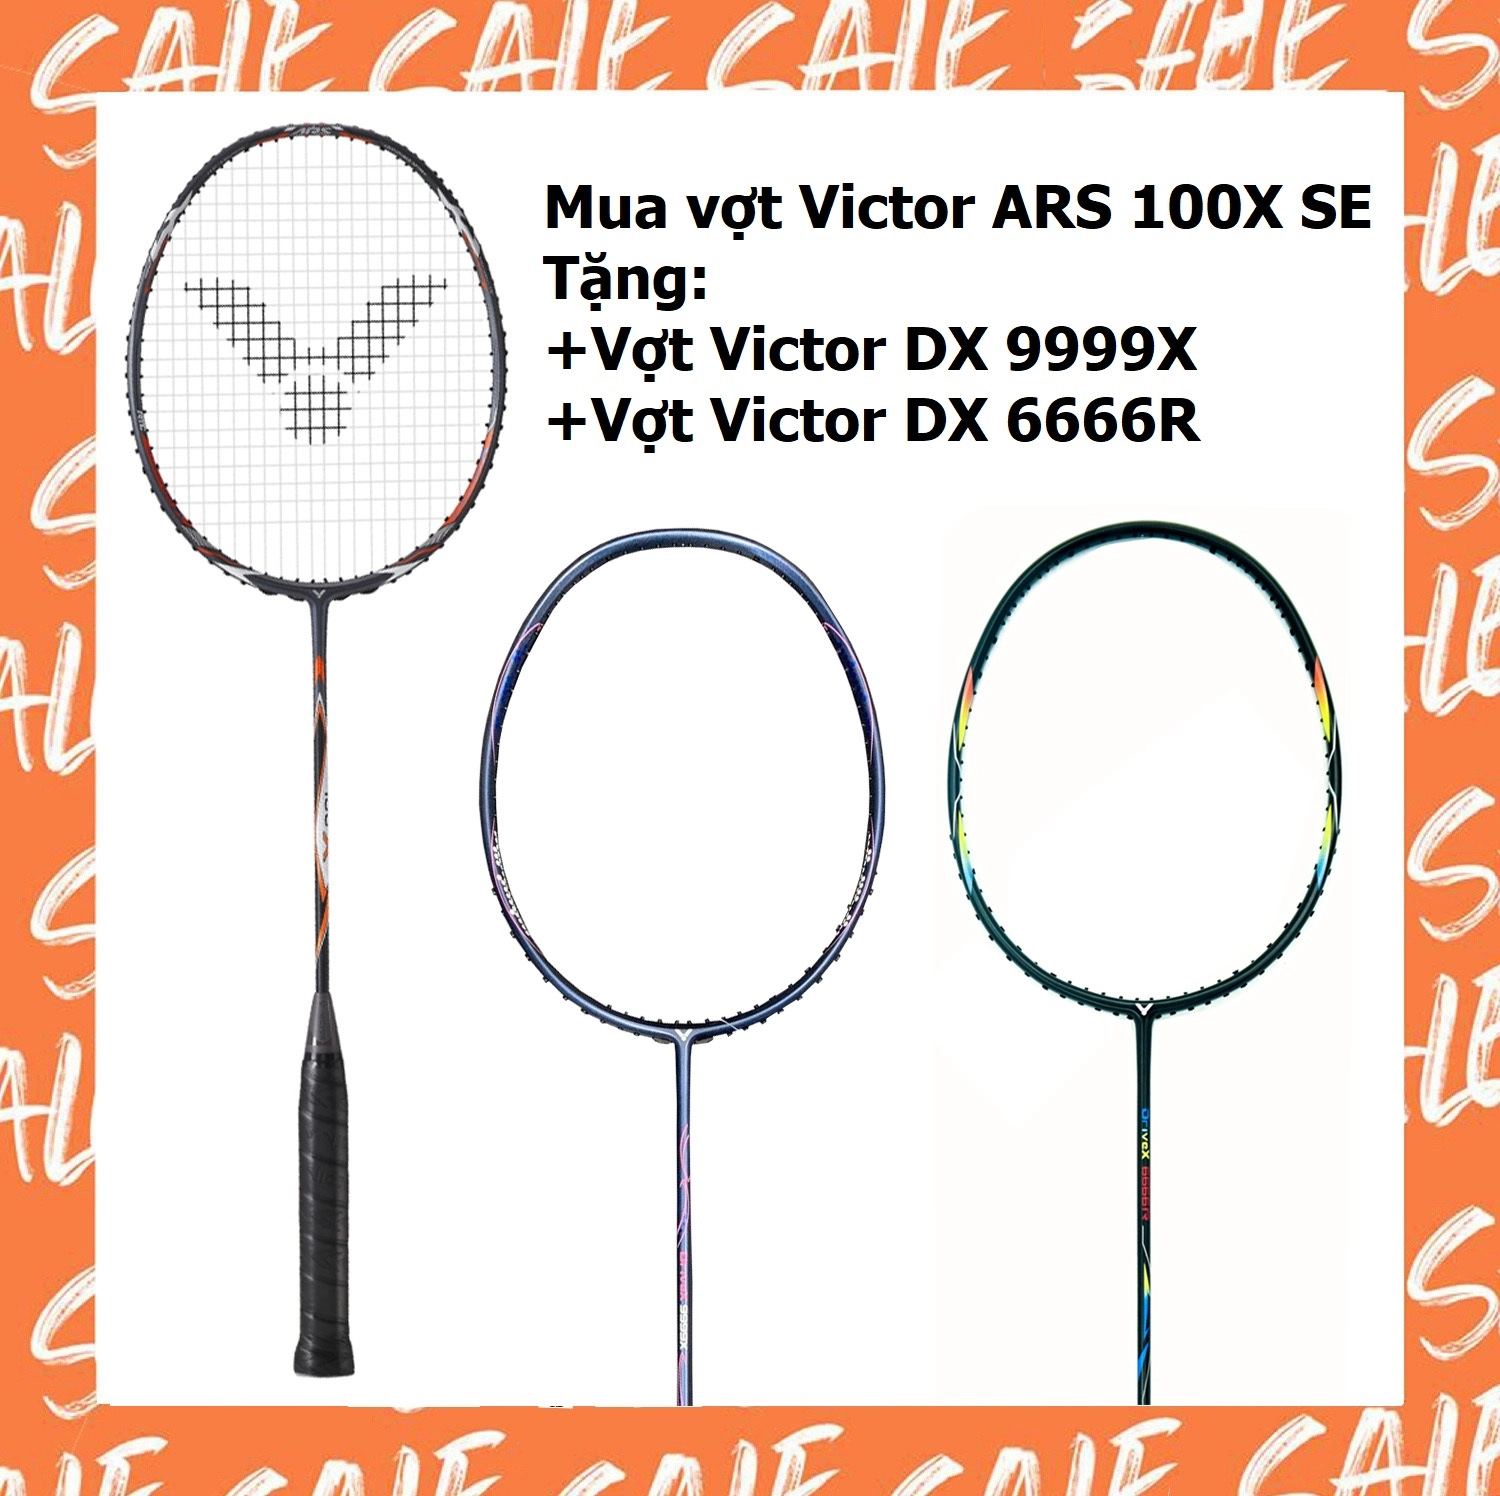 Mua vợt Victor ARS 100X SE tặng vợt Victor Drive X 9999   DX-6666R